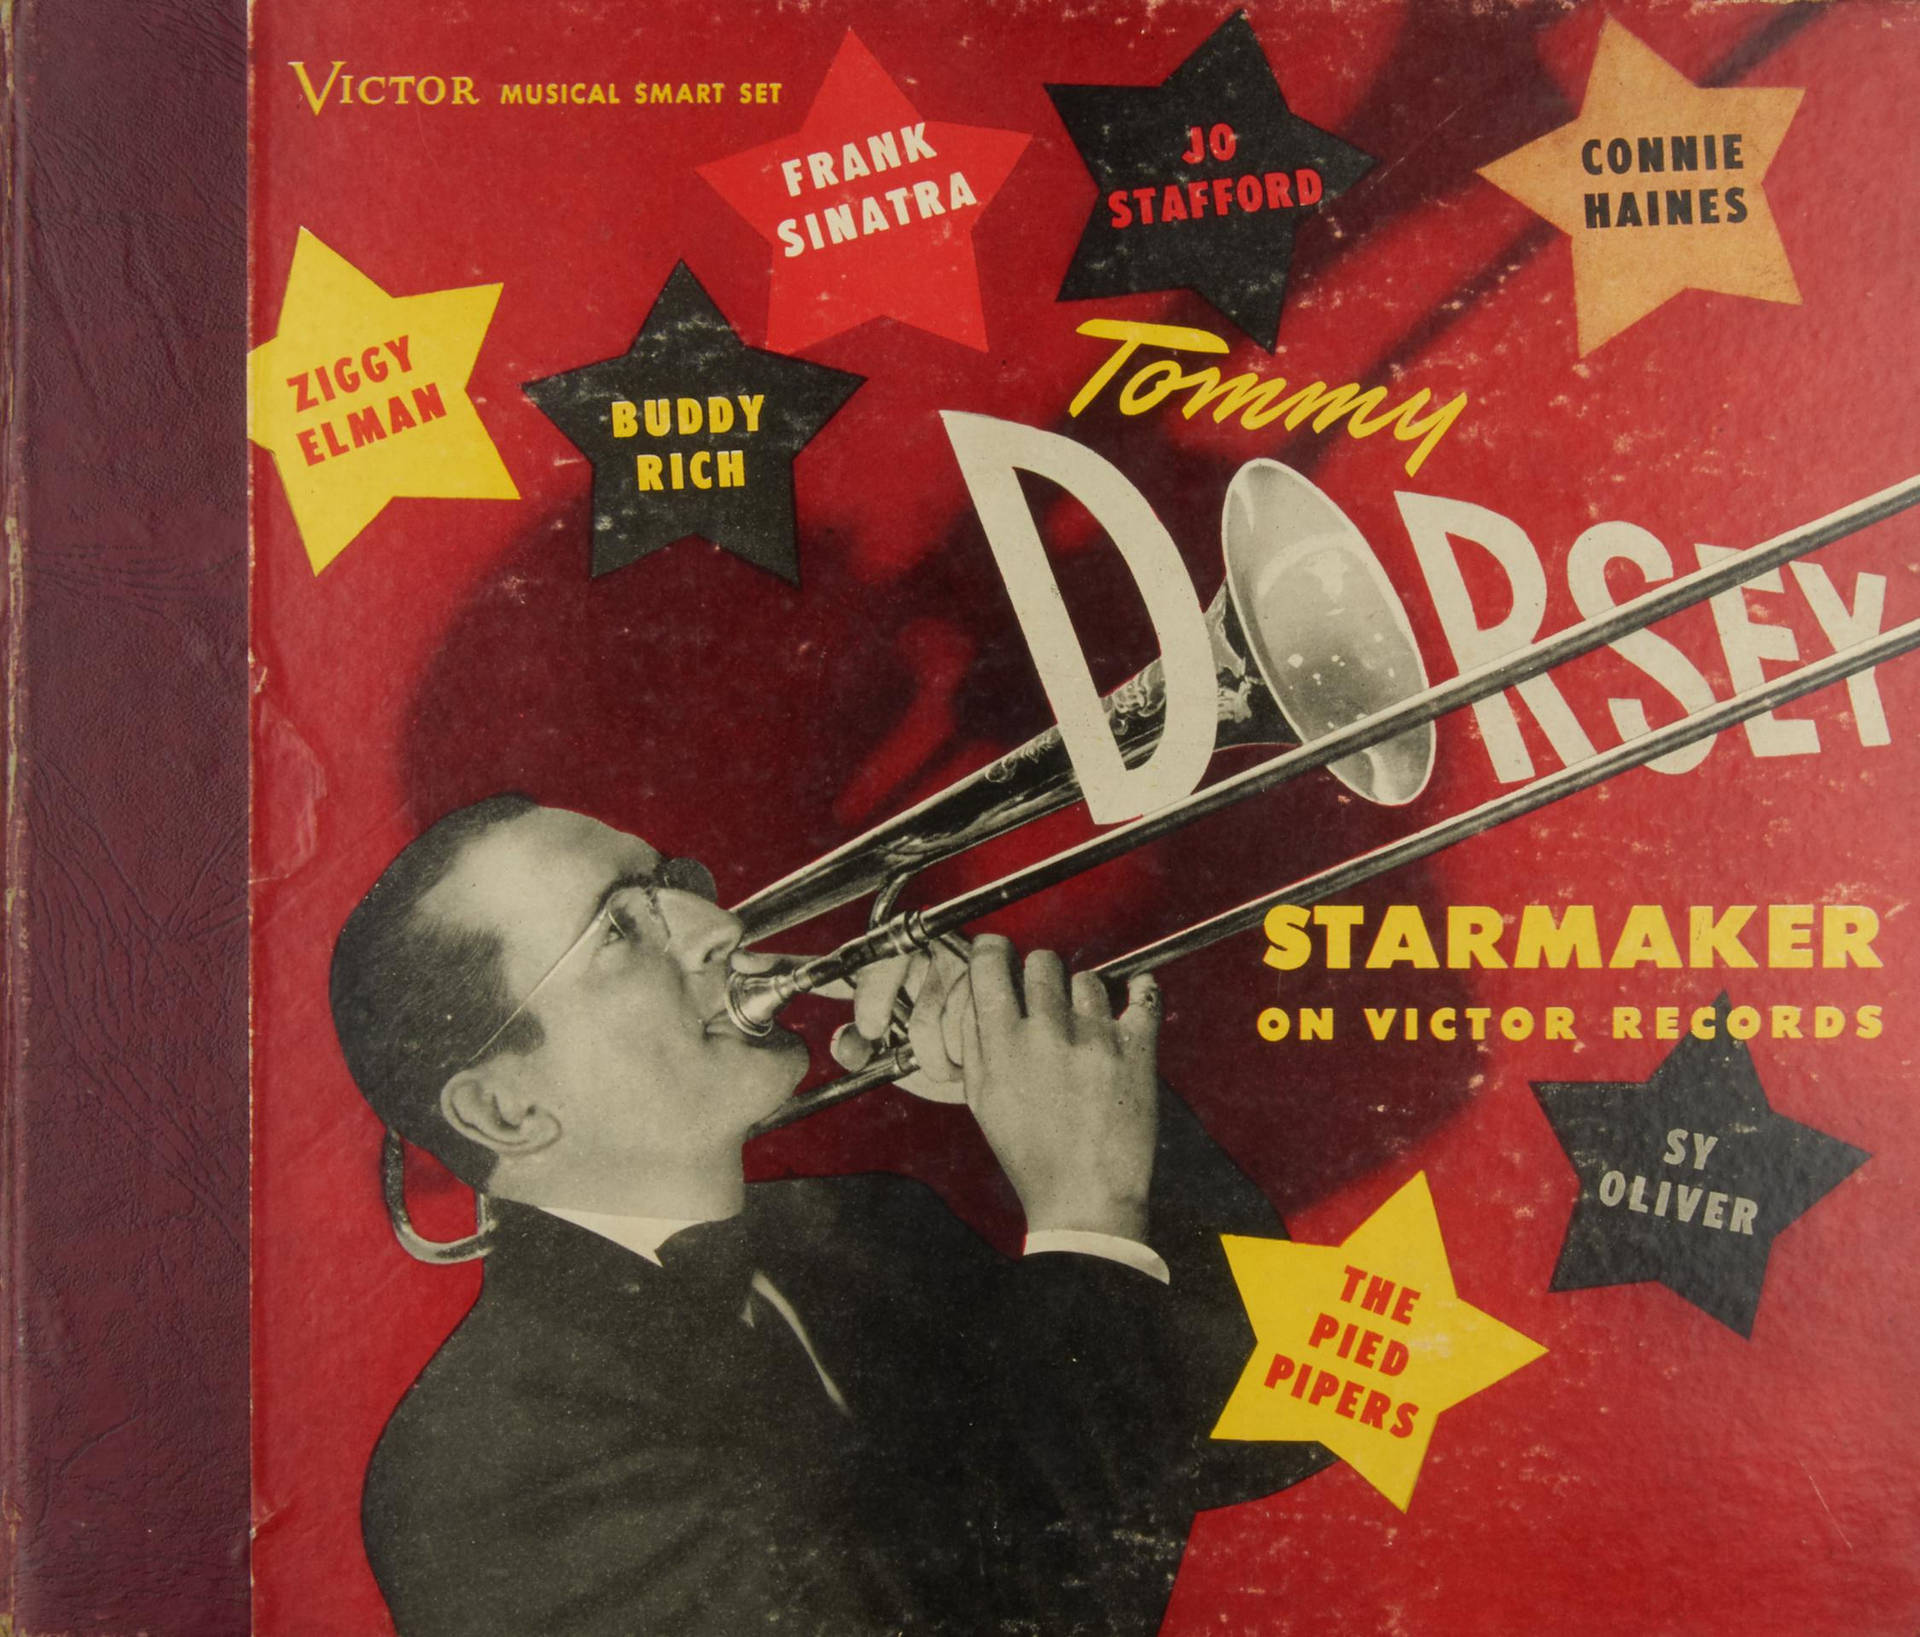 Tommy Dorsey Starmaker 1944 Album Art Wallpaper